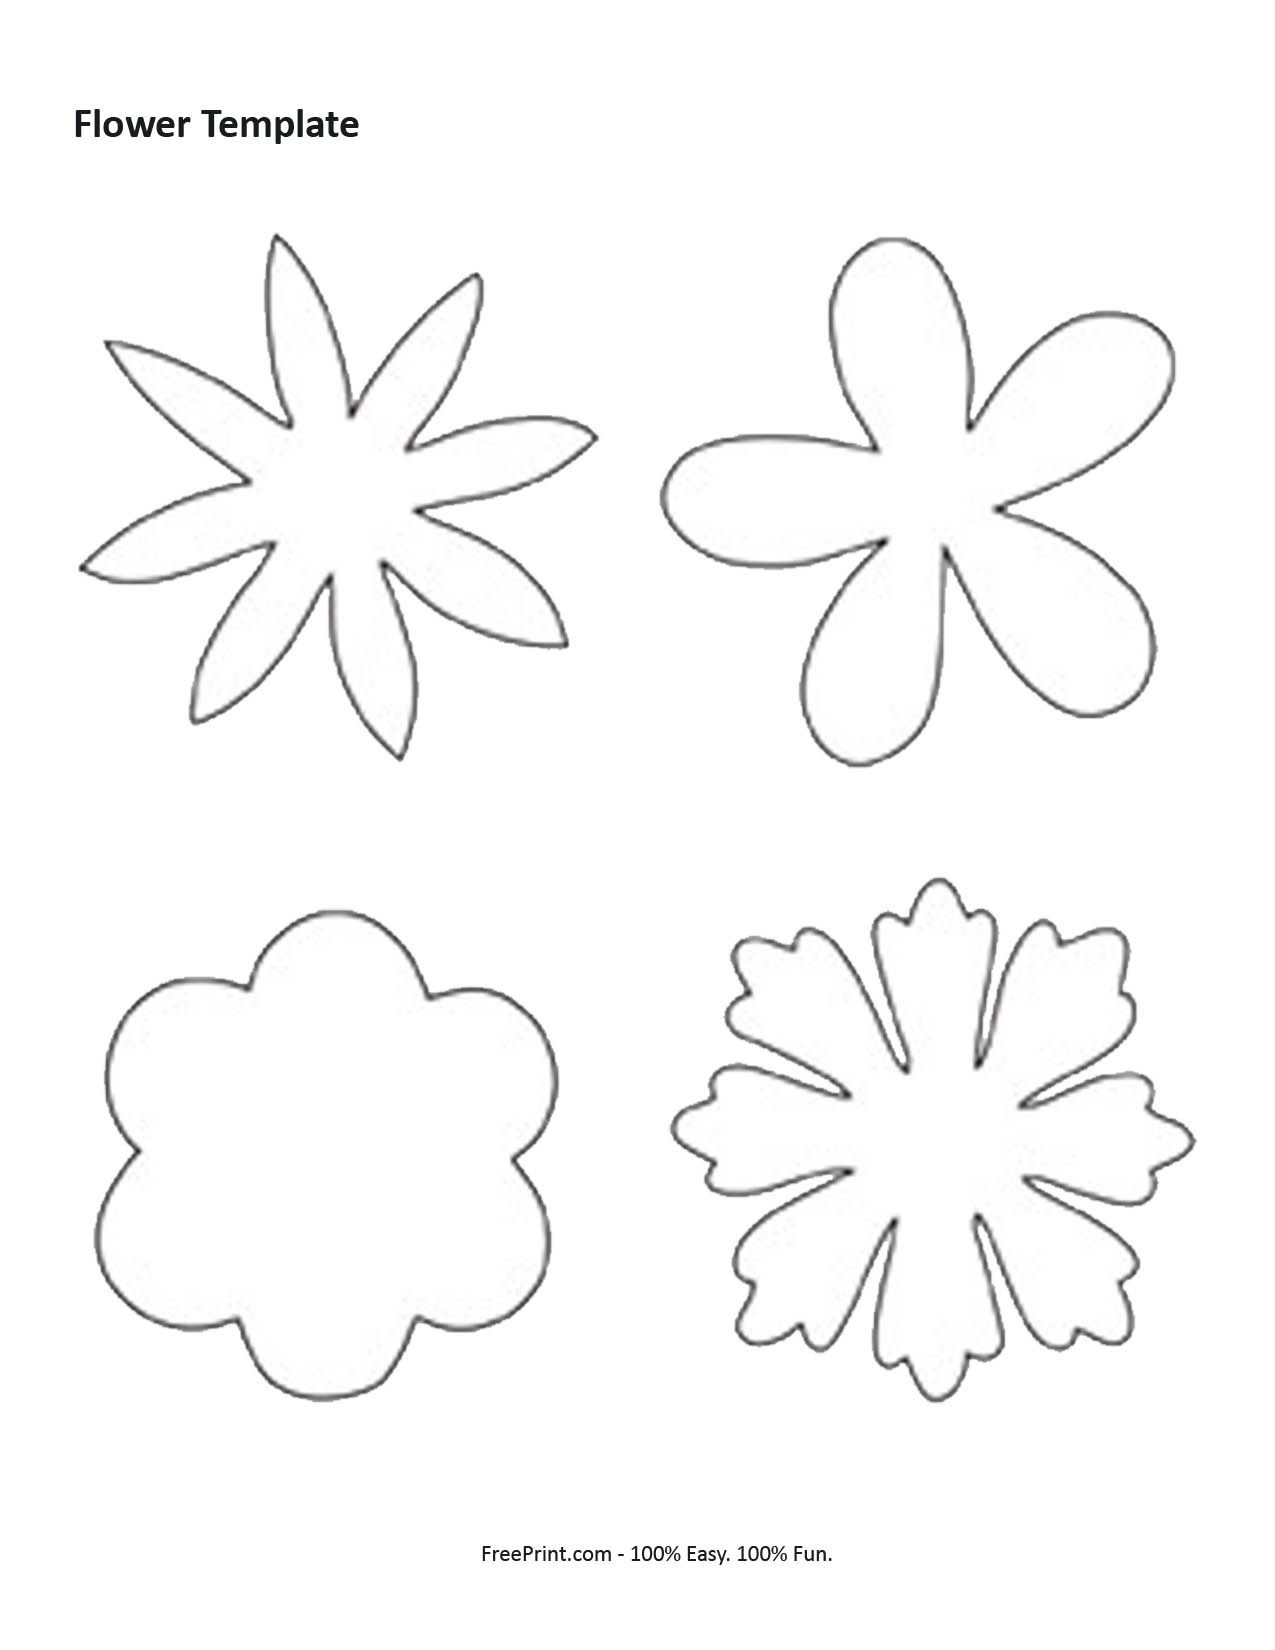 Free Printable Flower Templates, Download Free Printable Flower